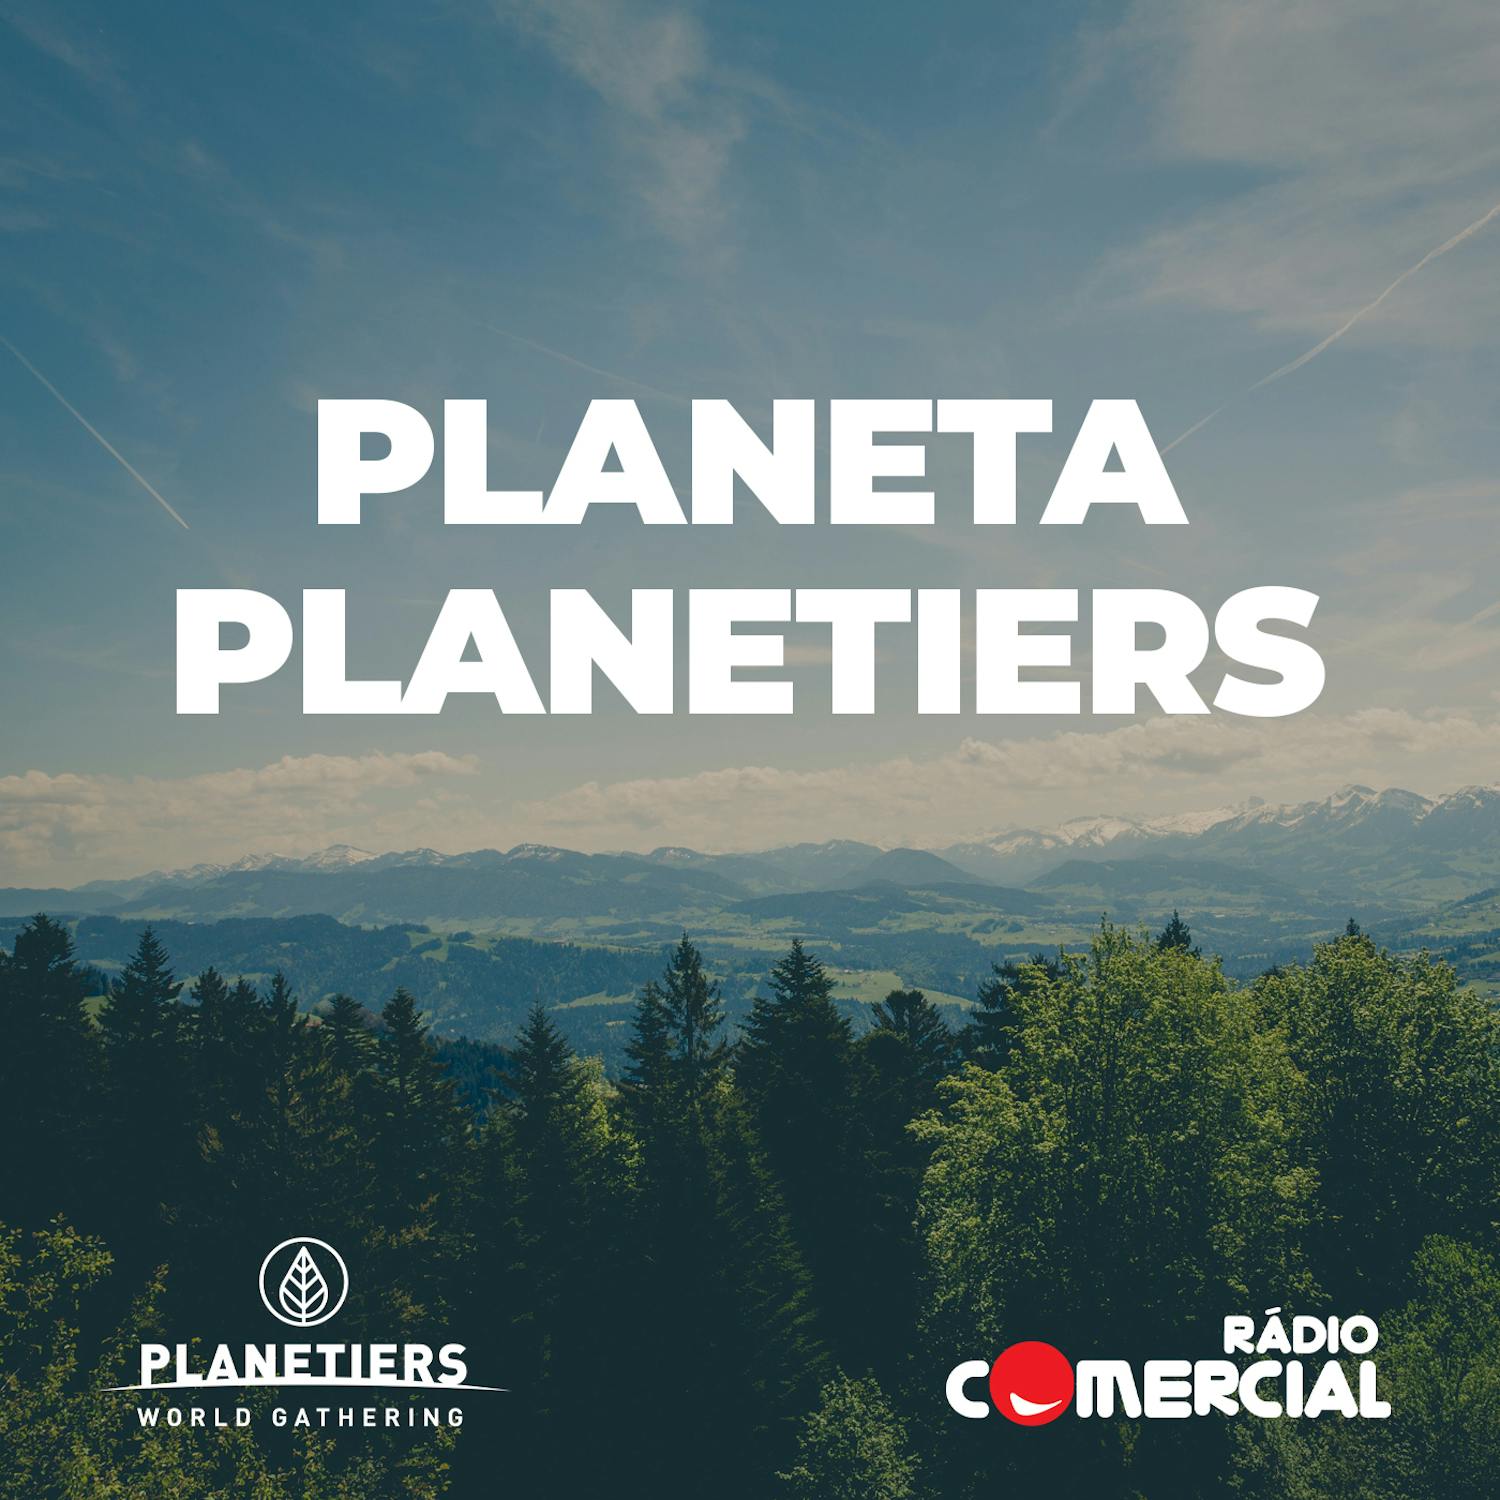 Rádio Comercial - Planeta Planetiers